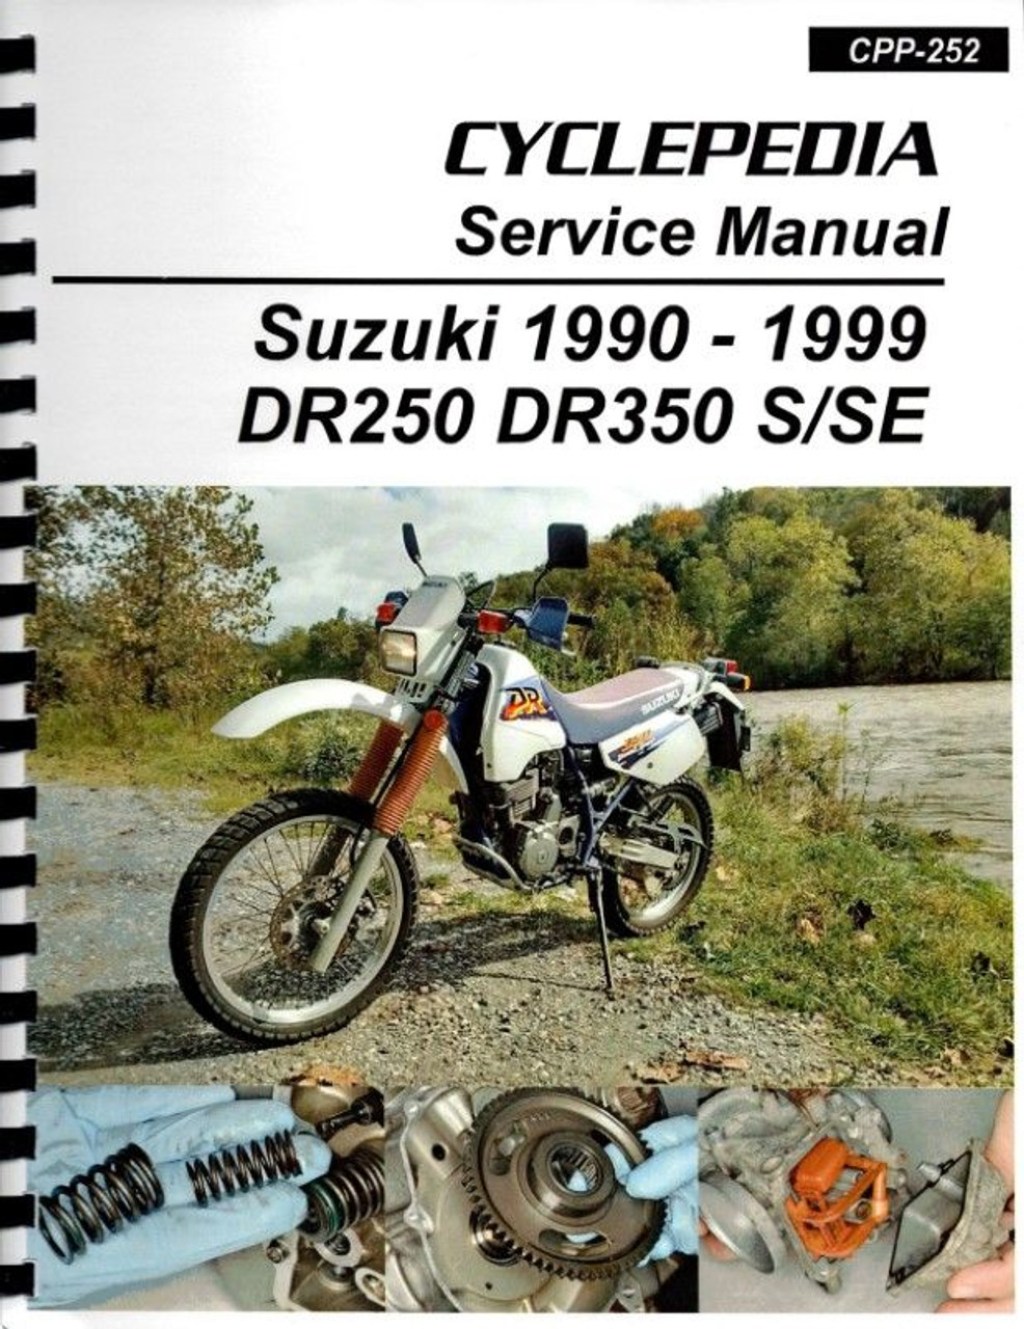 1995 suzuki dr250 manual pdf - Suzuki DR, DR S/SE Service Manual: -